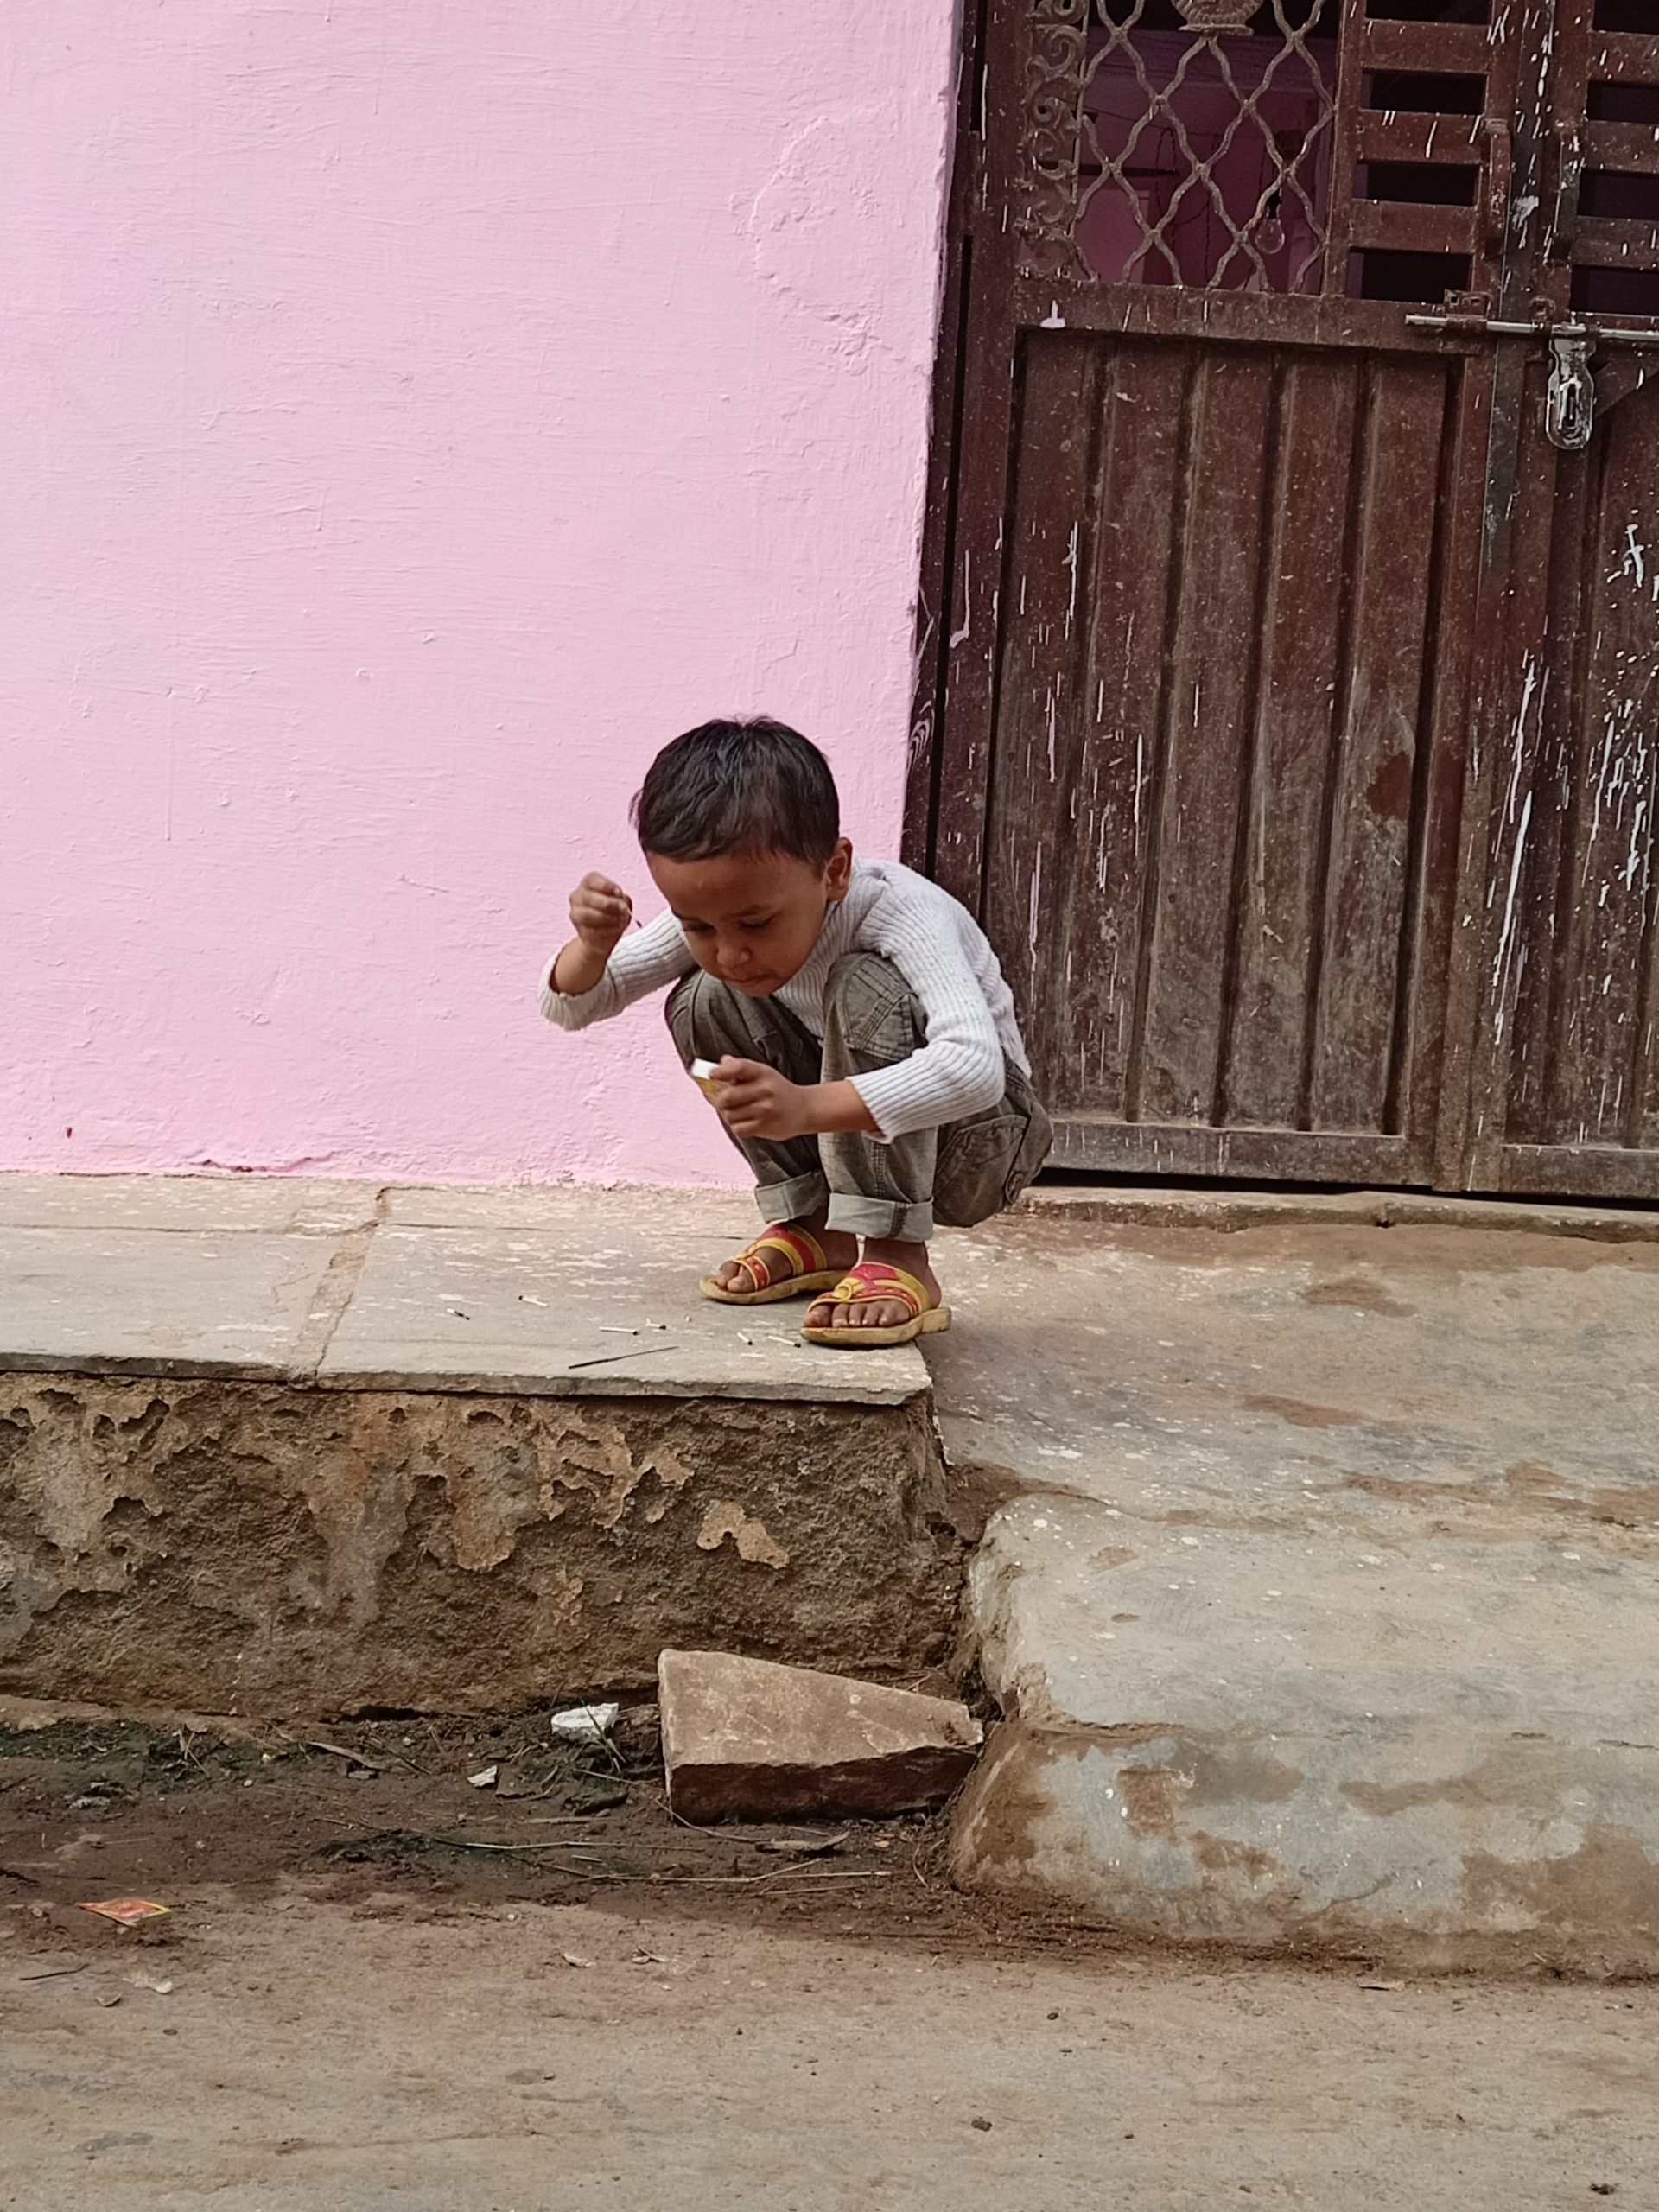 A child playing